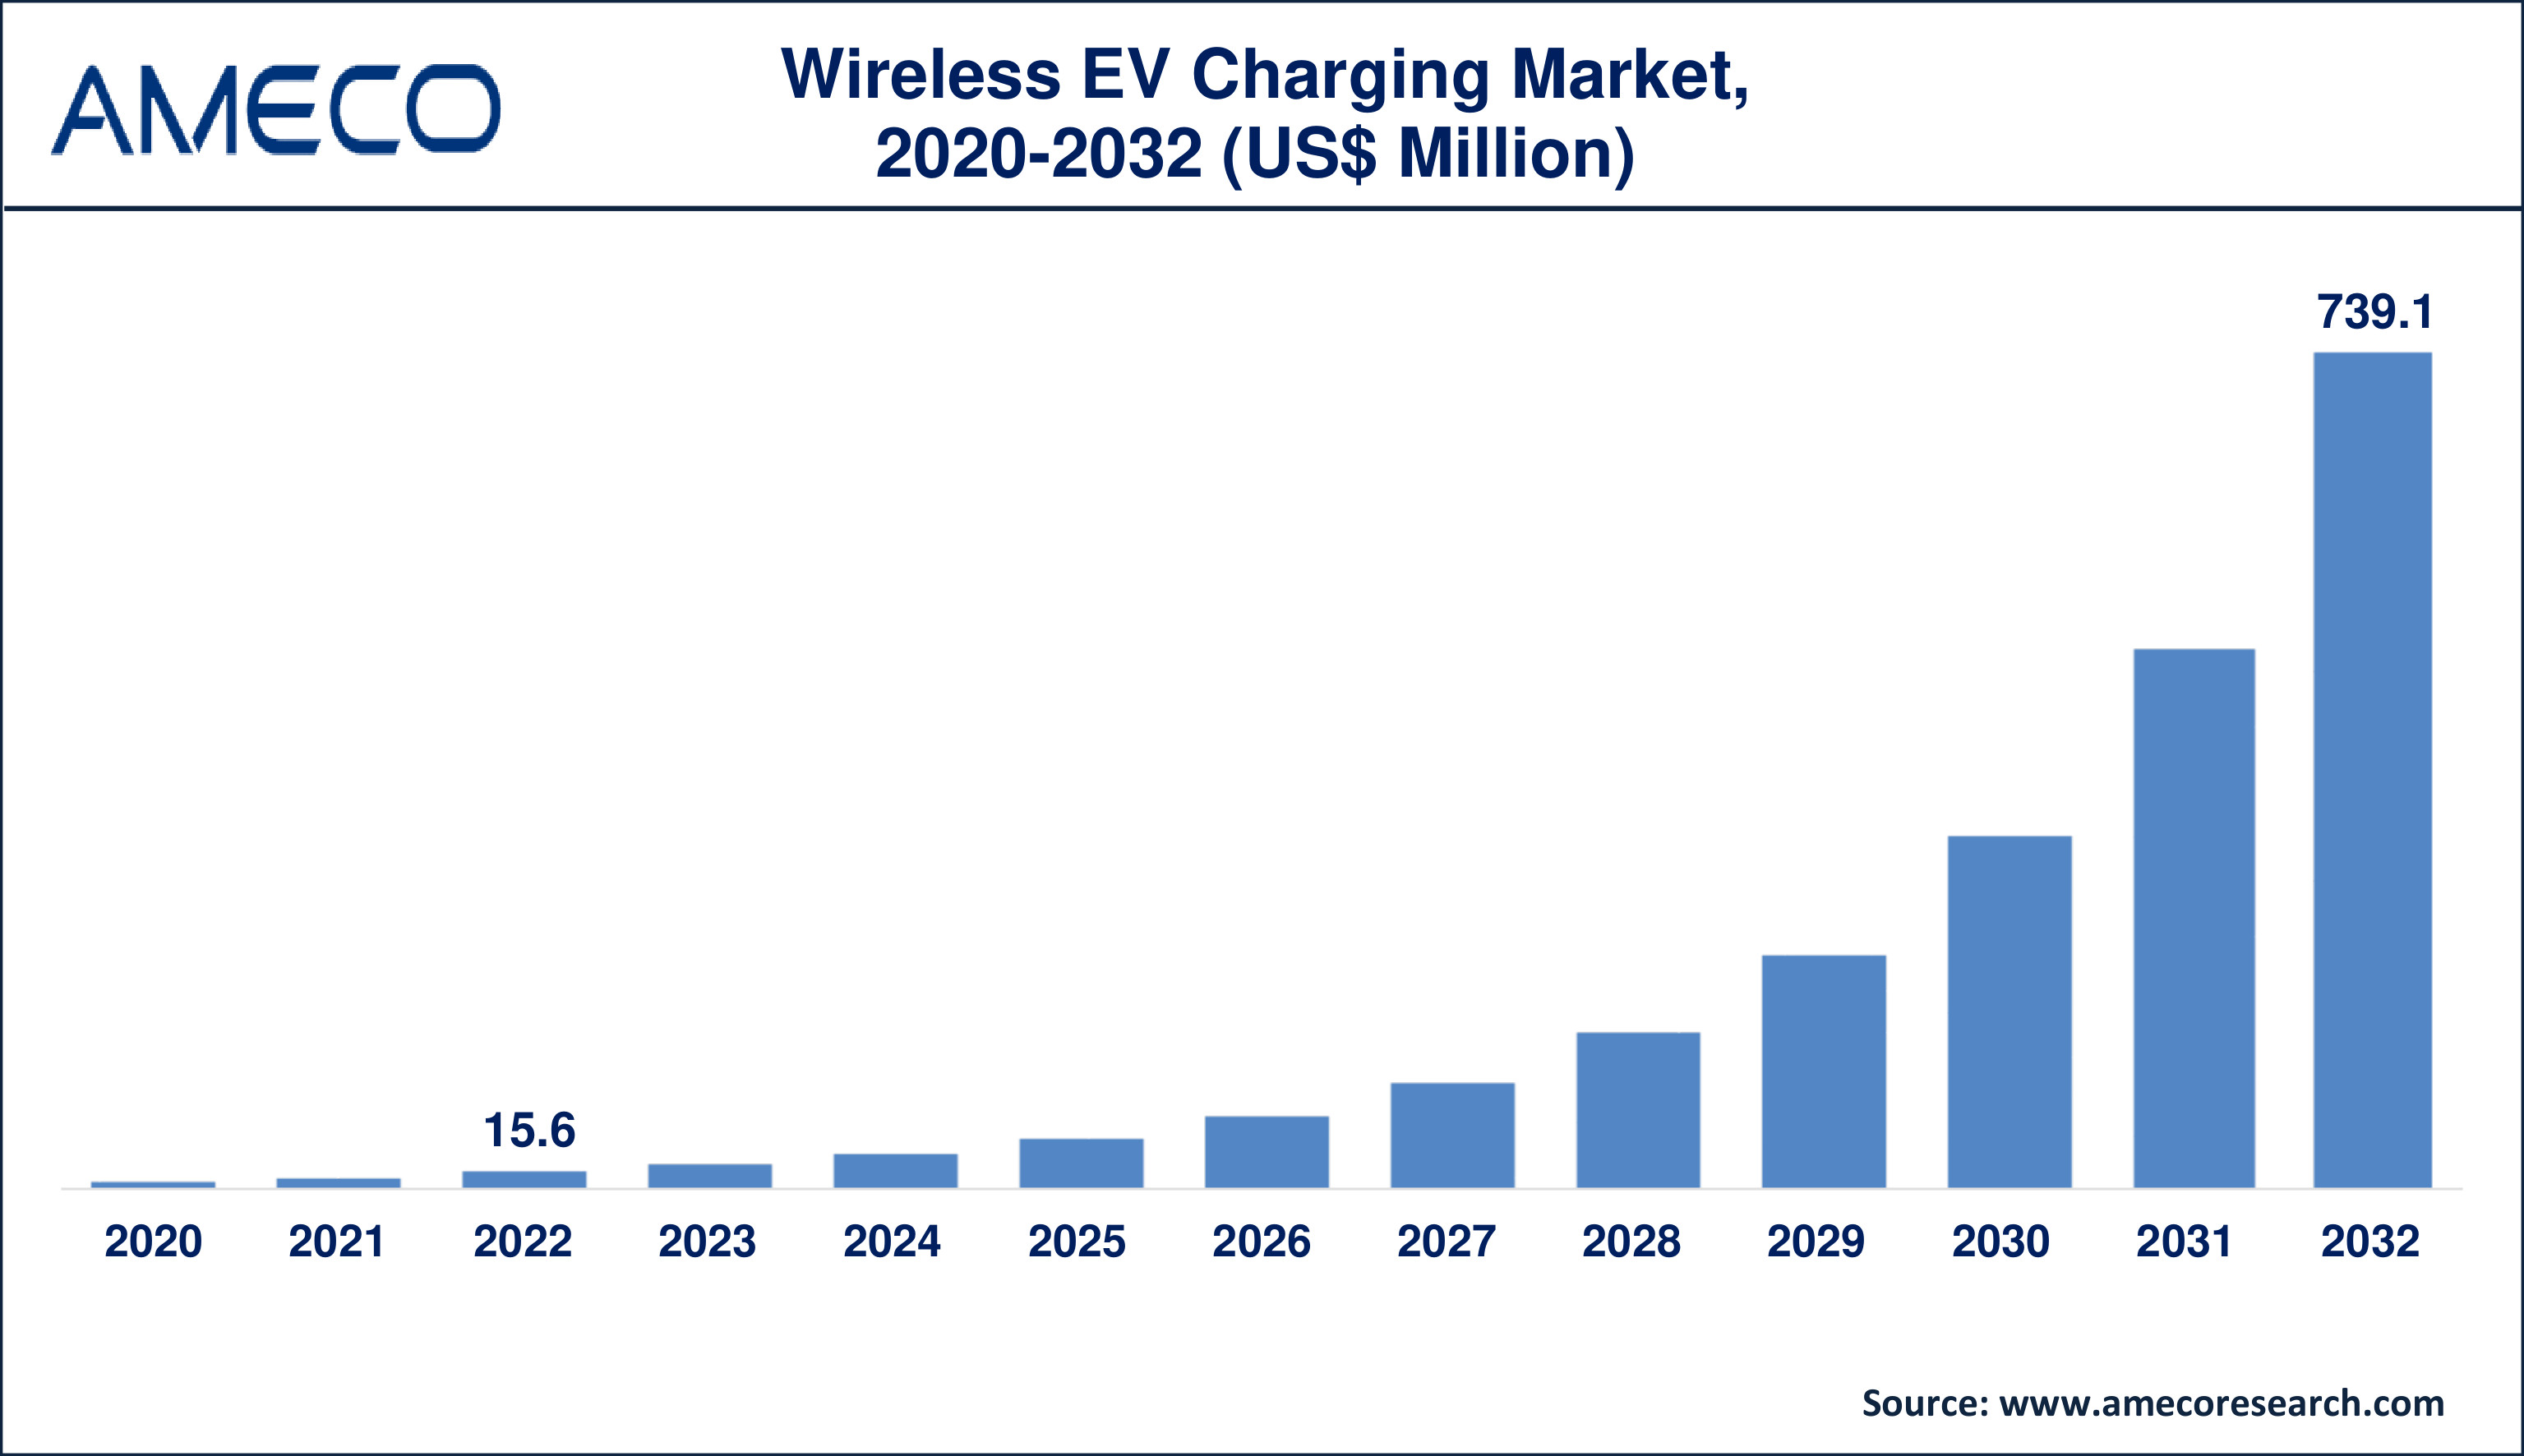 Wireless EV Charging Market Dynamics